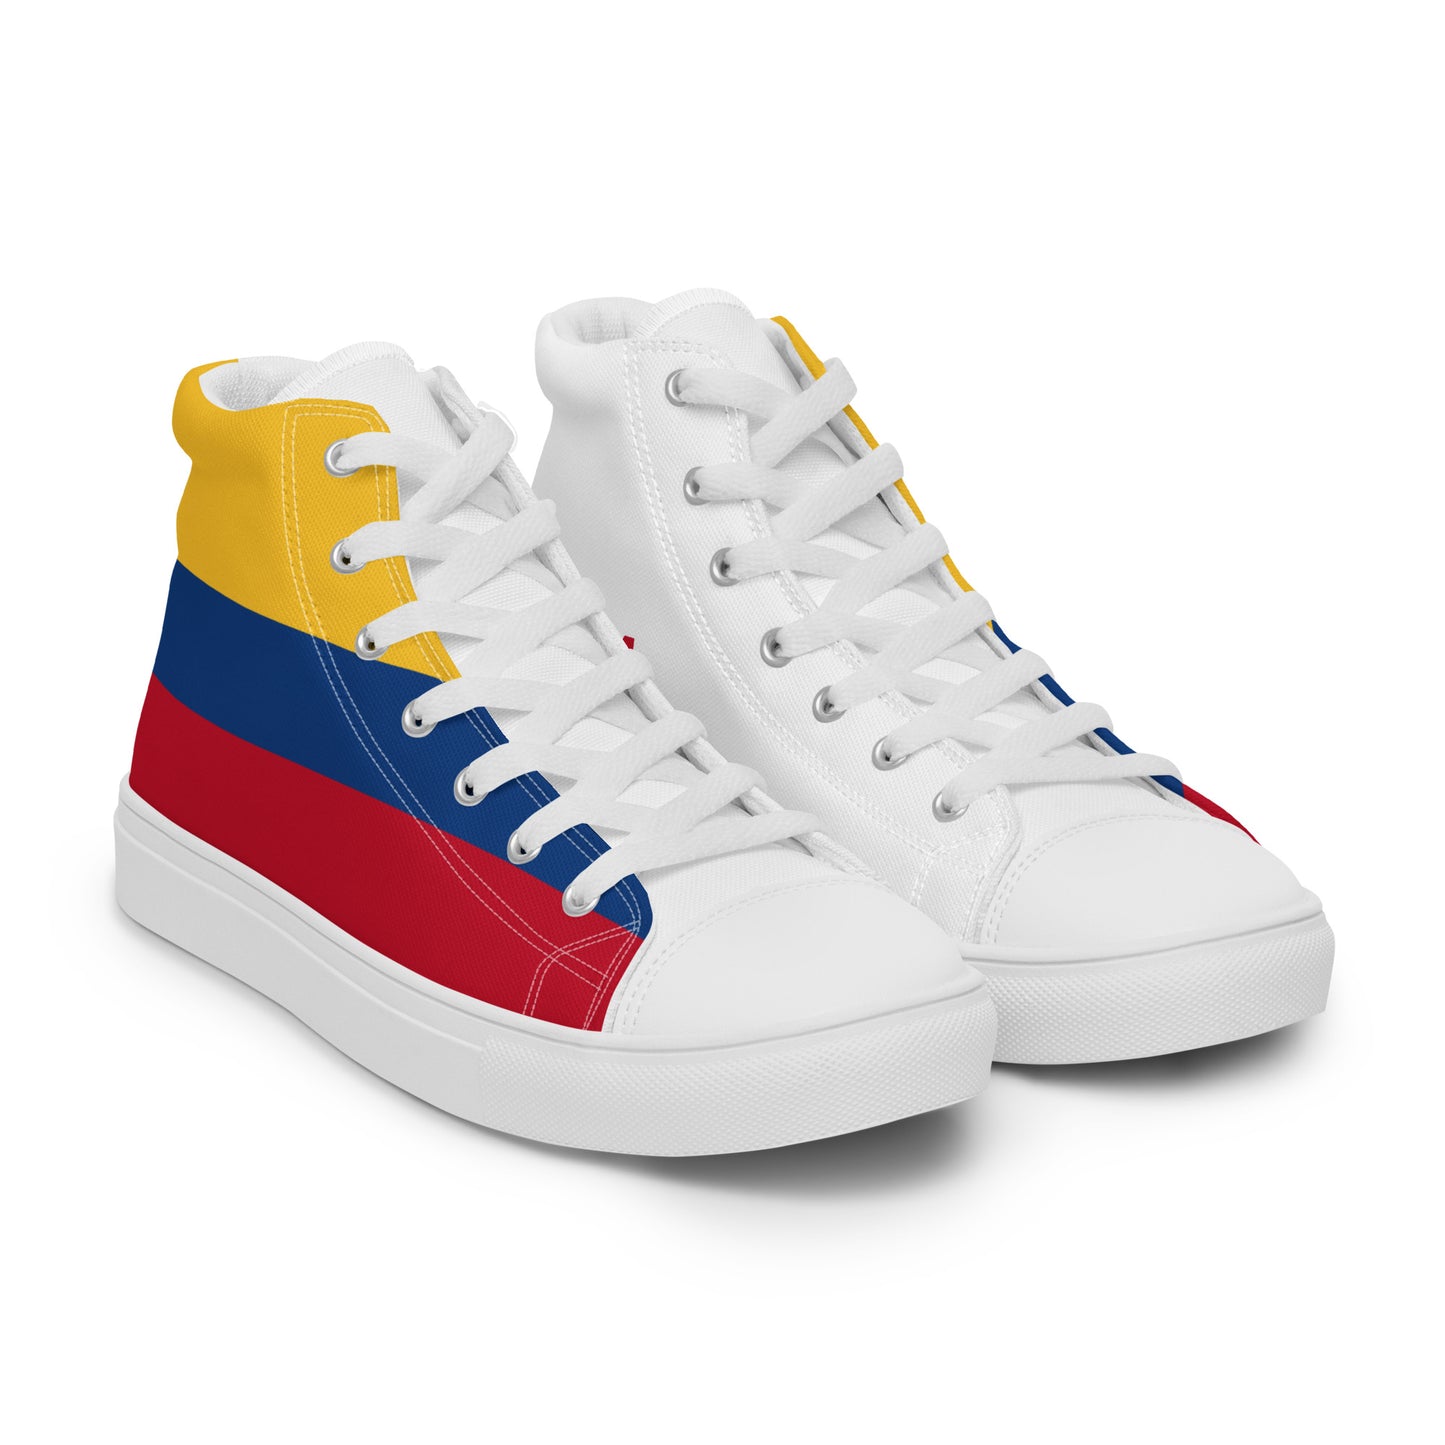 Colombia - Men - Bandera - High top shoes